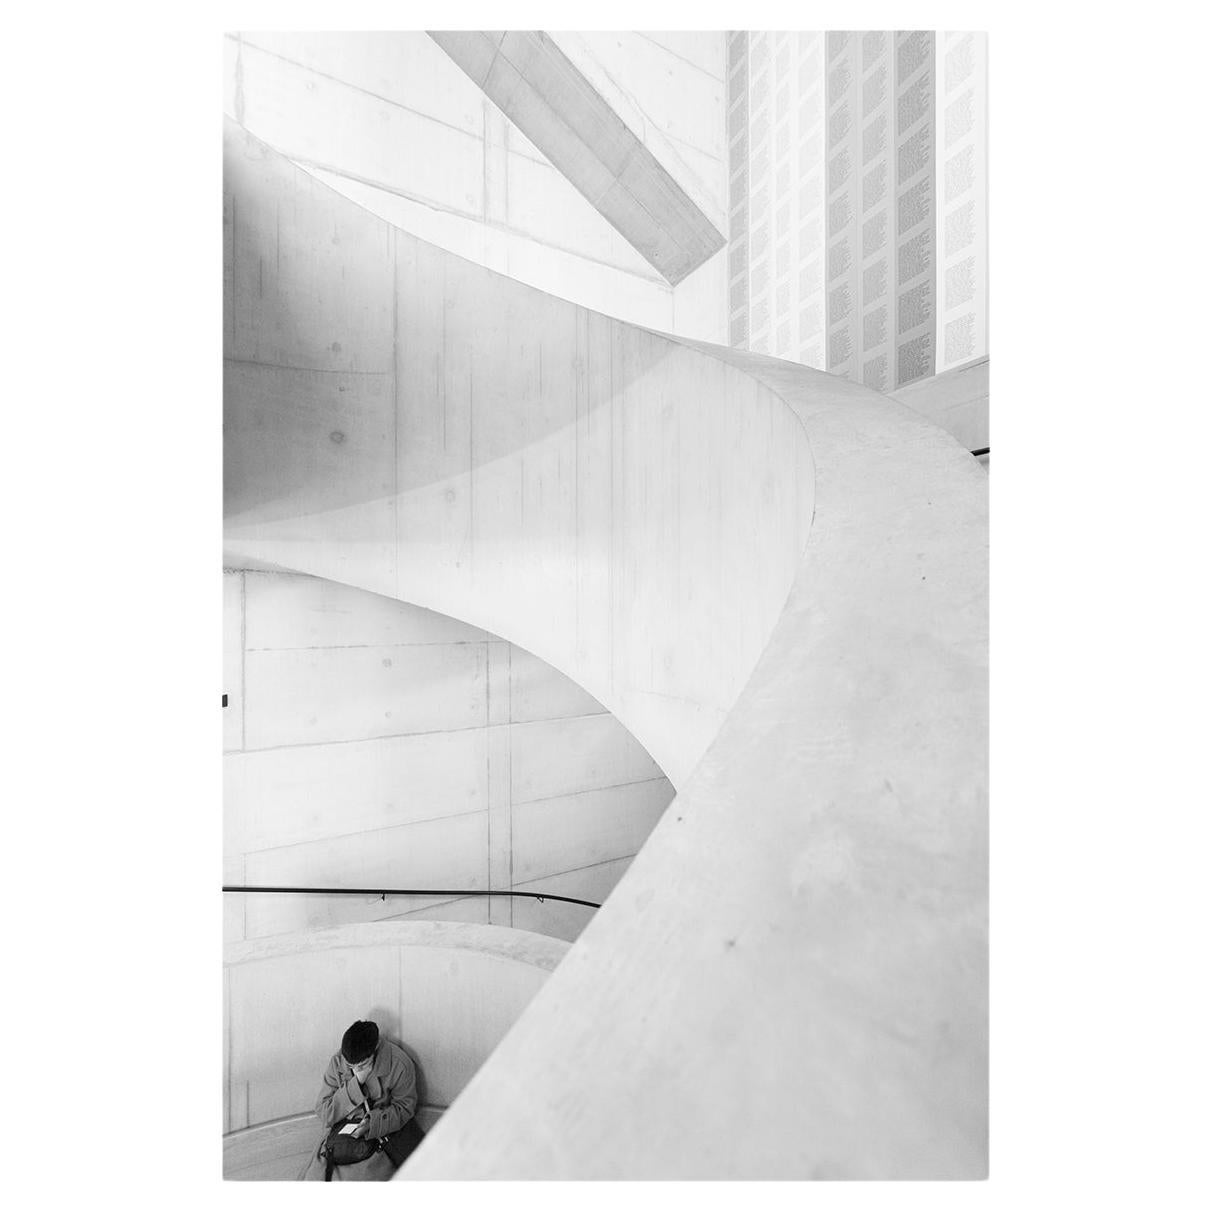 Tate Modern – Zweier-Stuhl (Staircase Two)